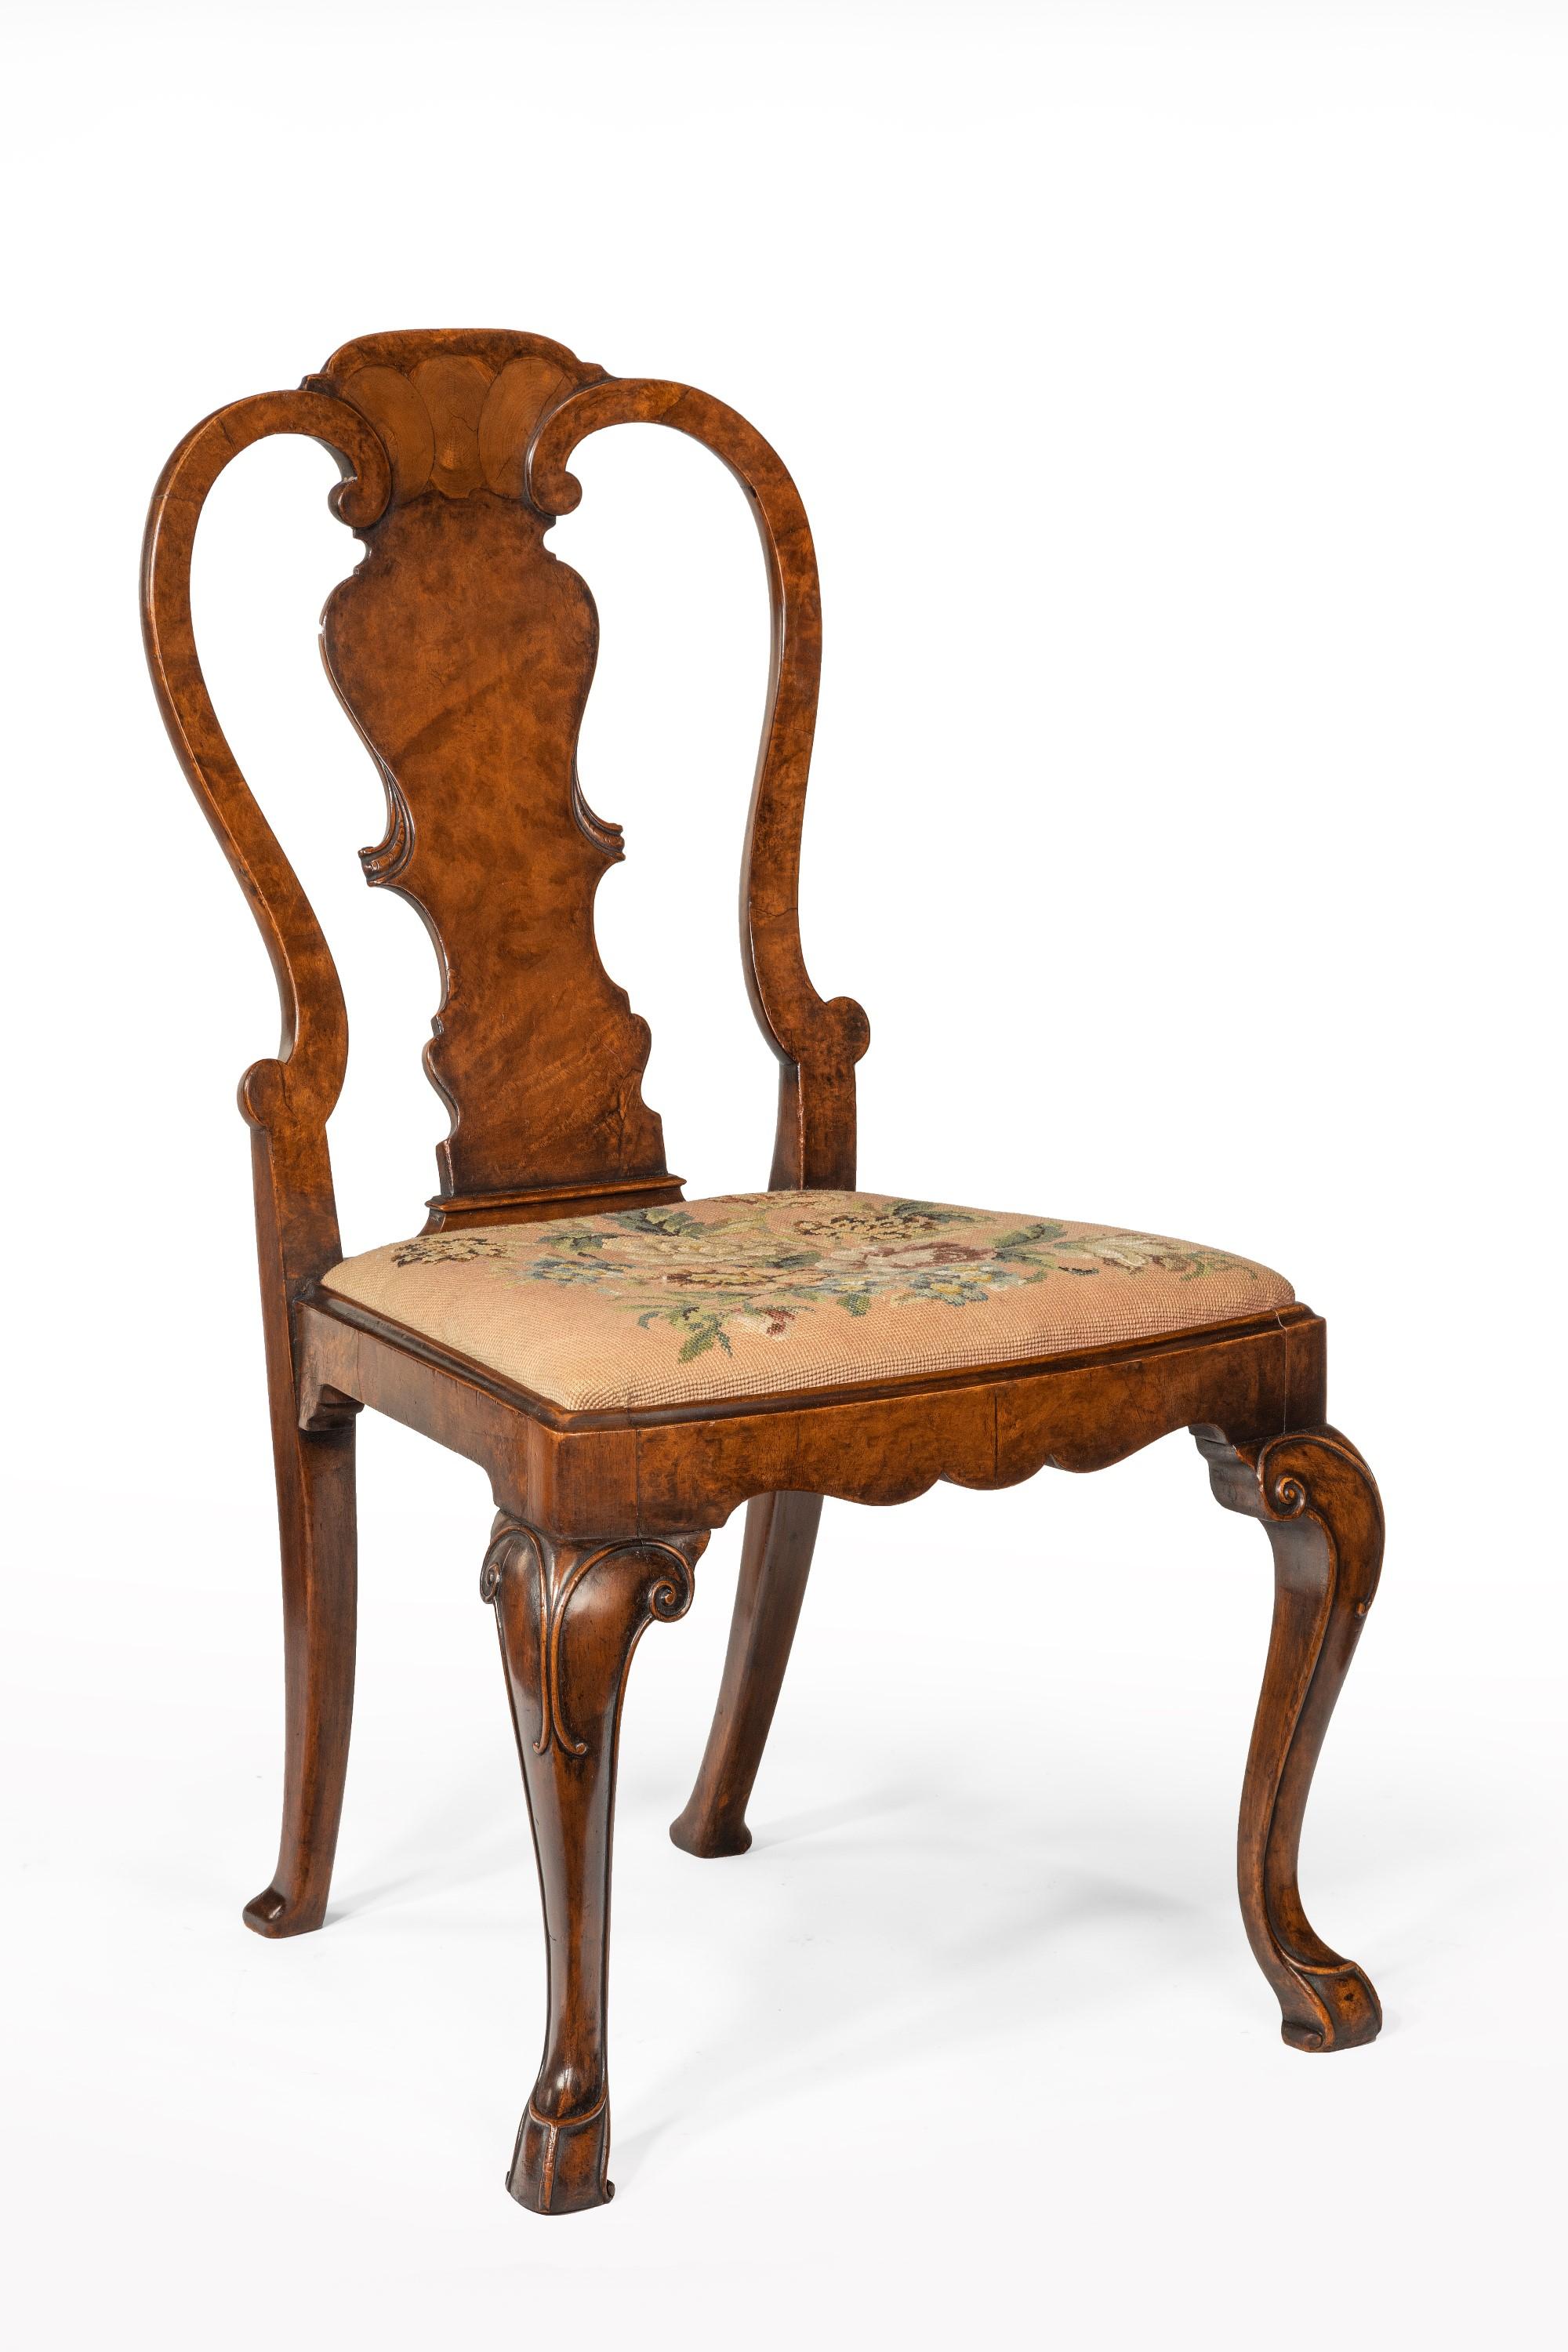 Quality 19th Century Walnut Side Chair with Original Needlework Seat 1